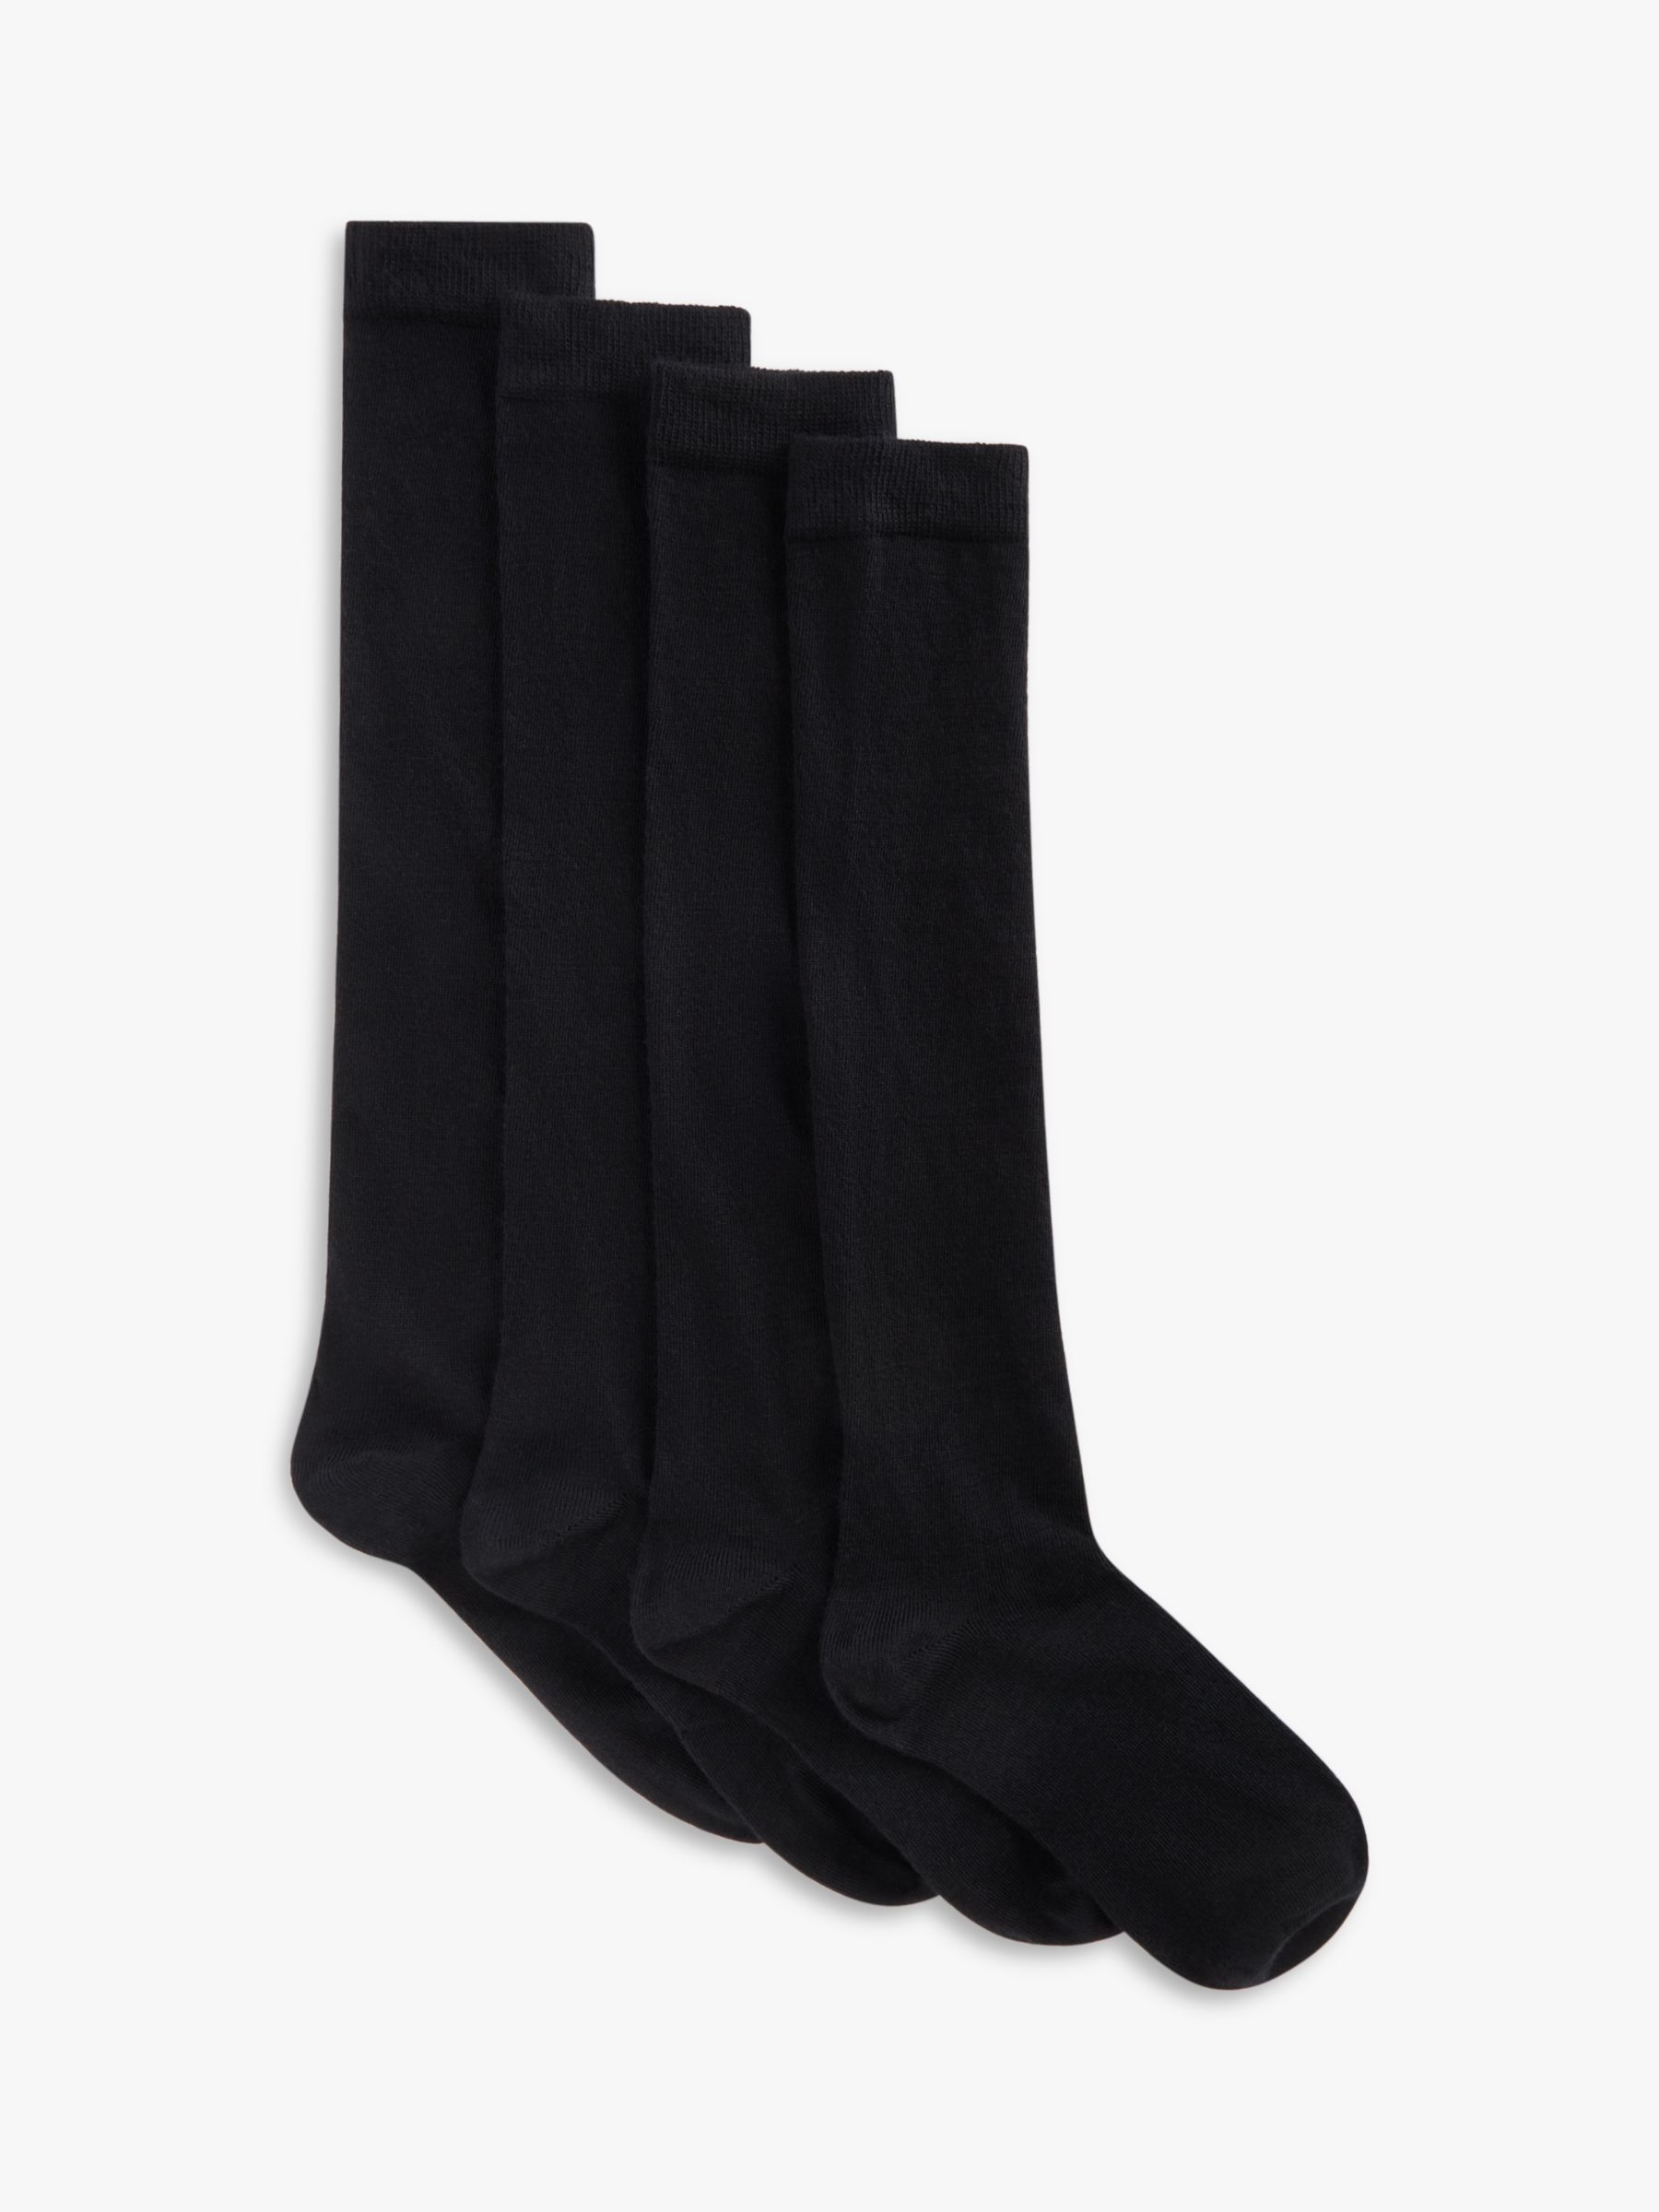 Warm Socks For Cold Feet